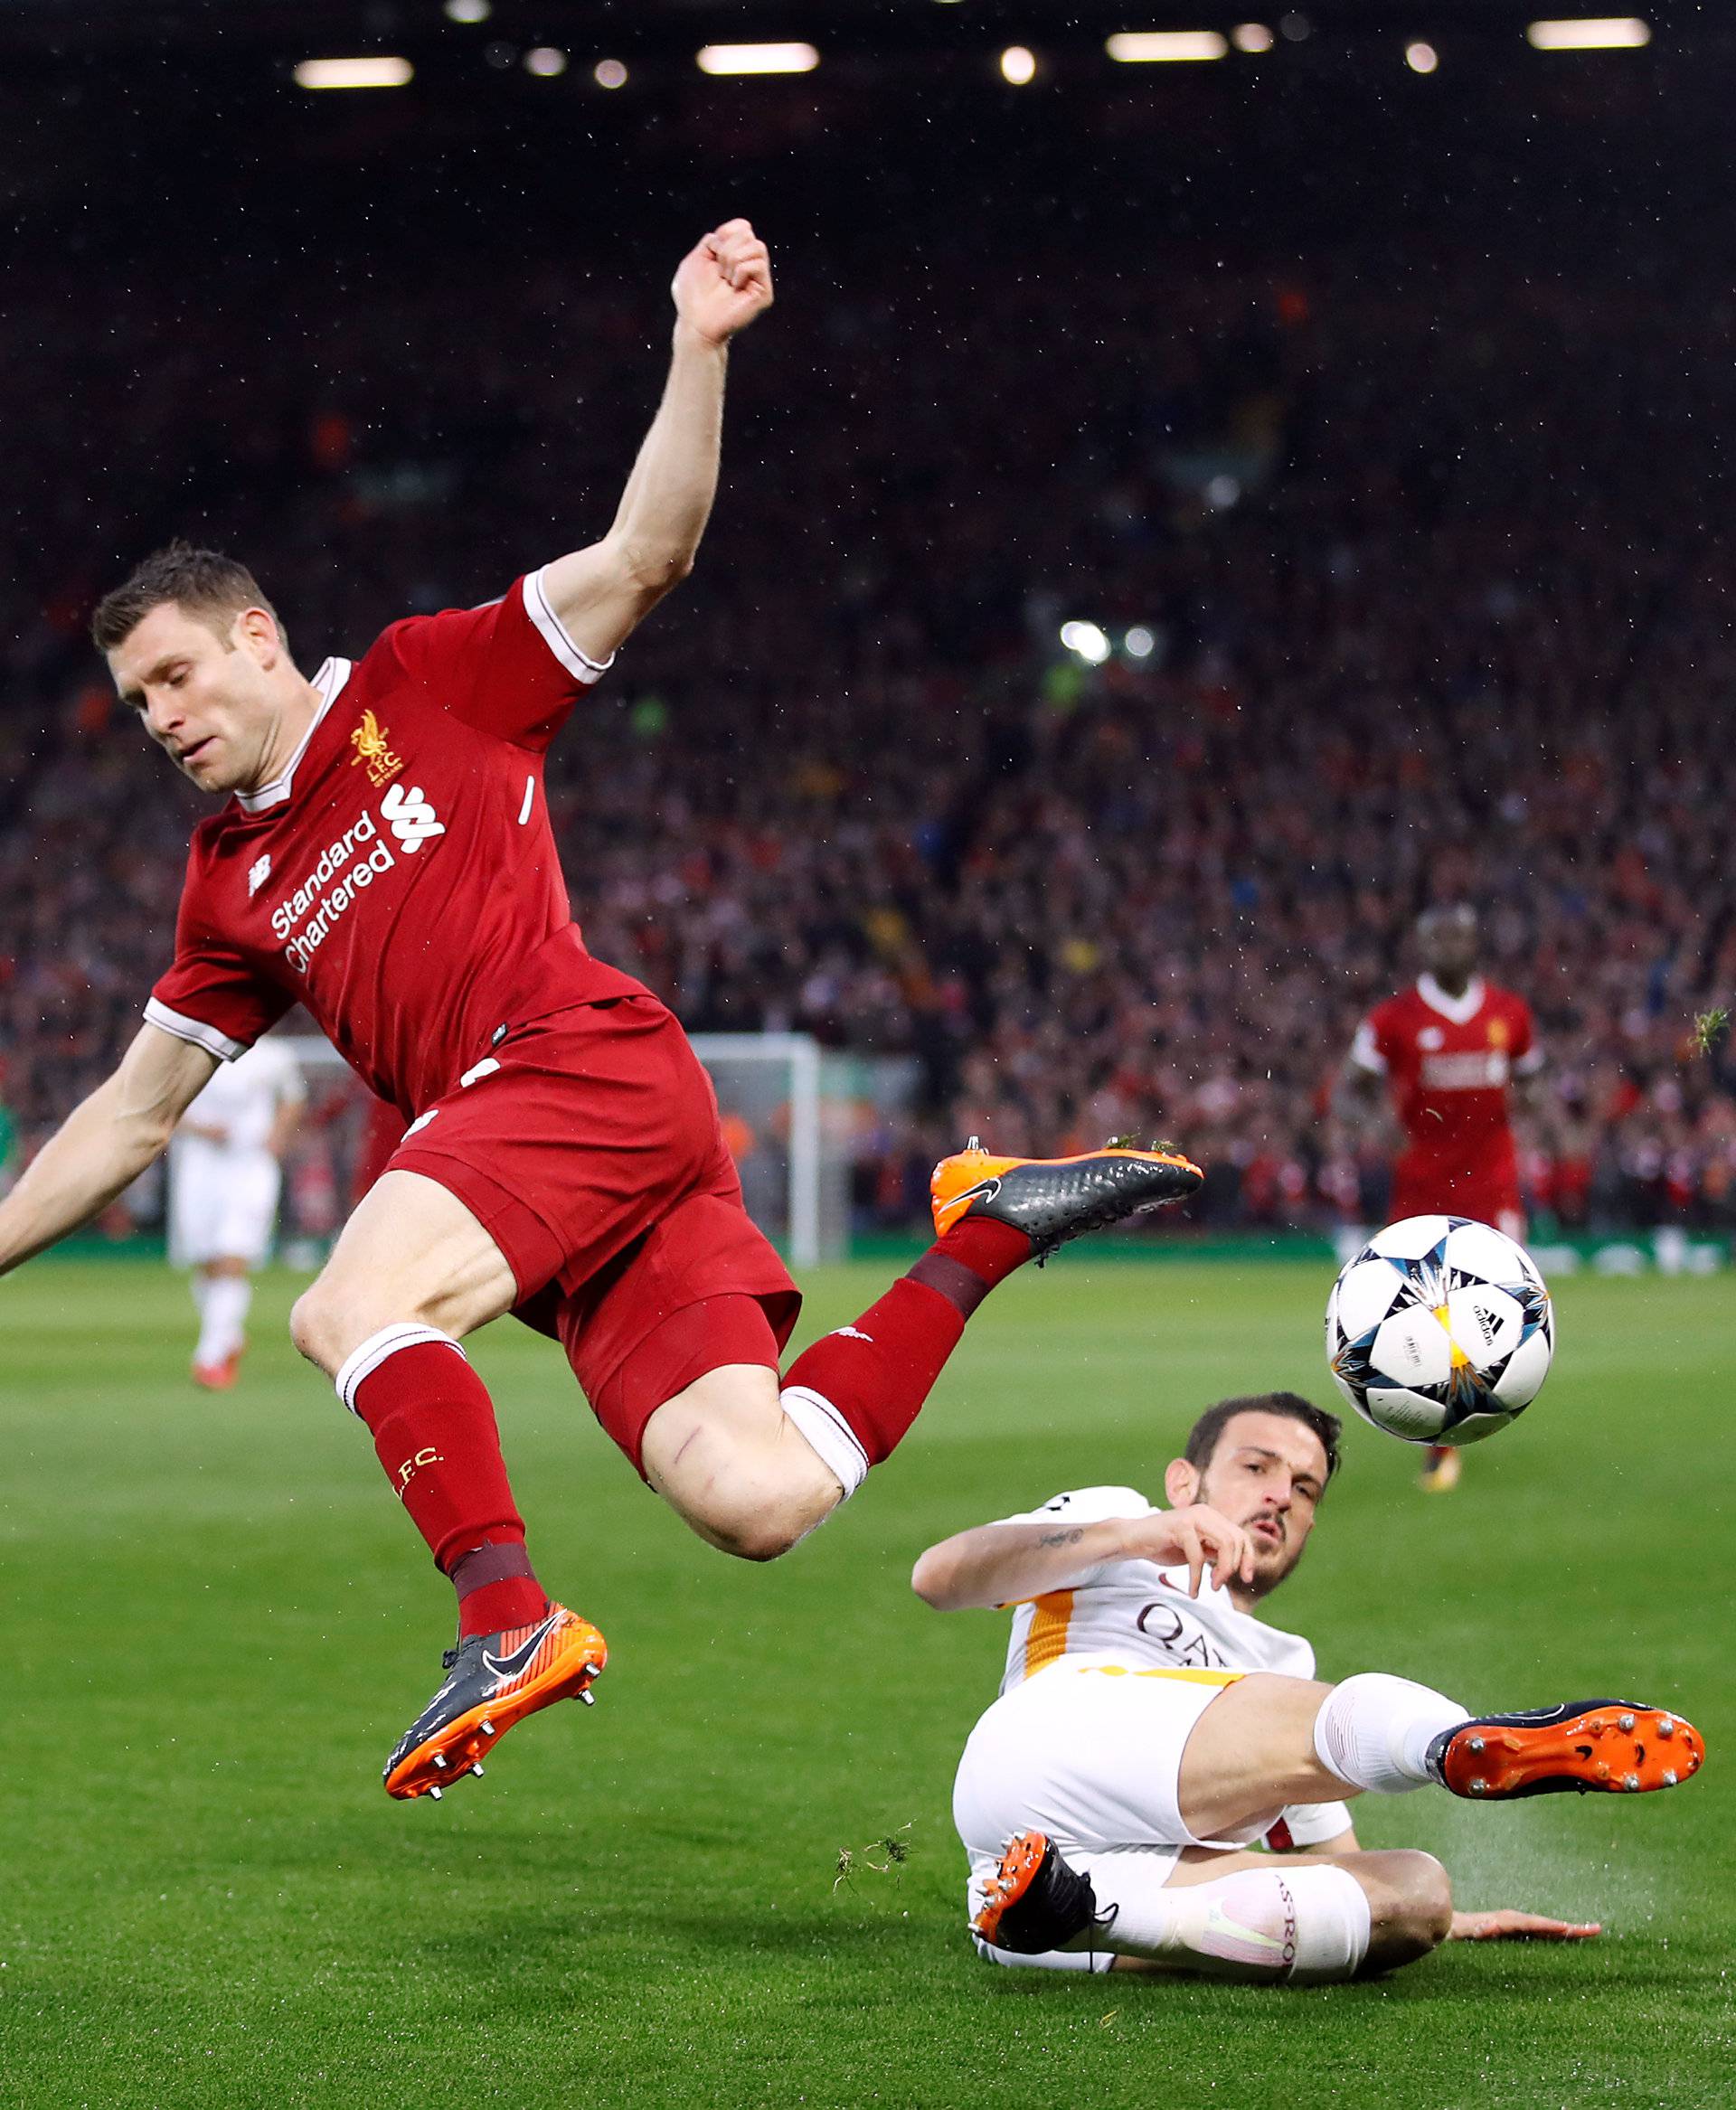 Champions League Semi Final First Leg - Liverpool vs AS Roma